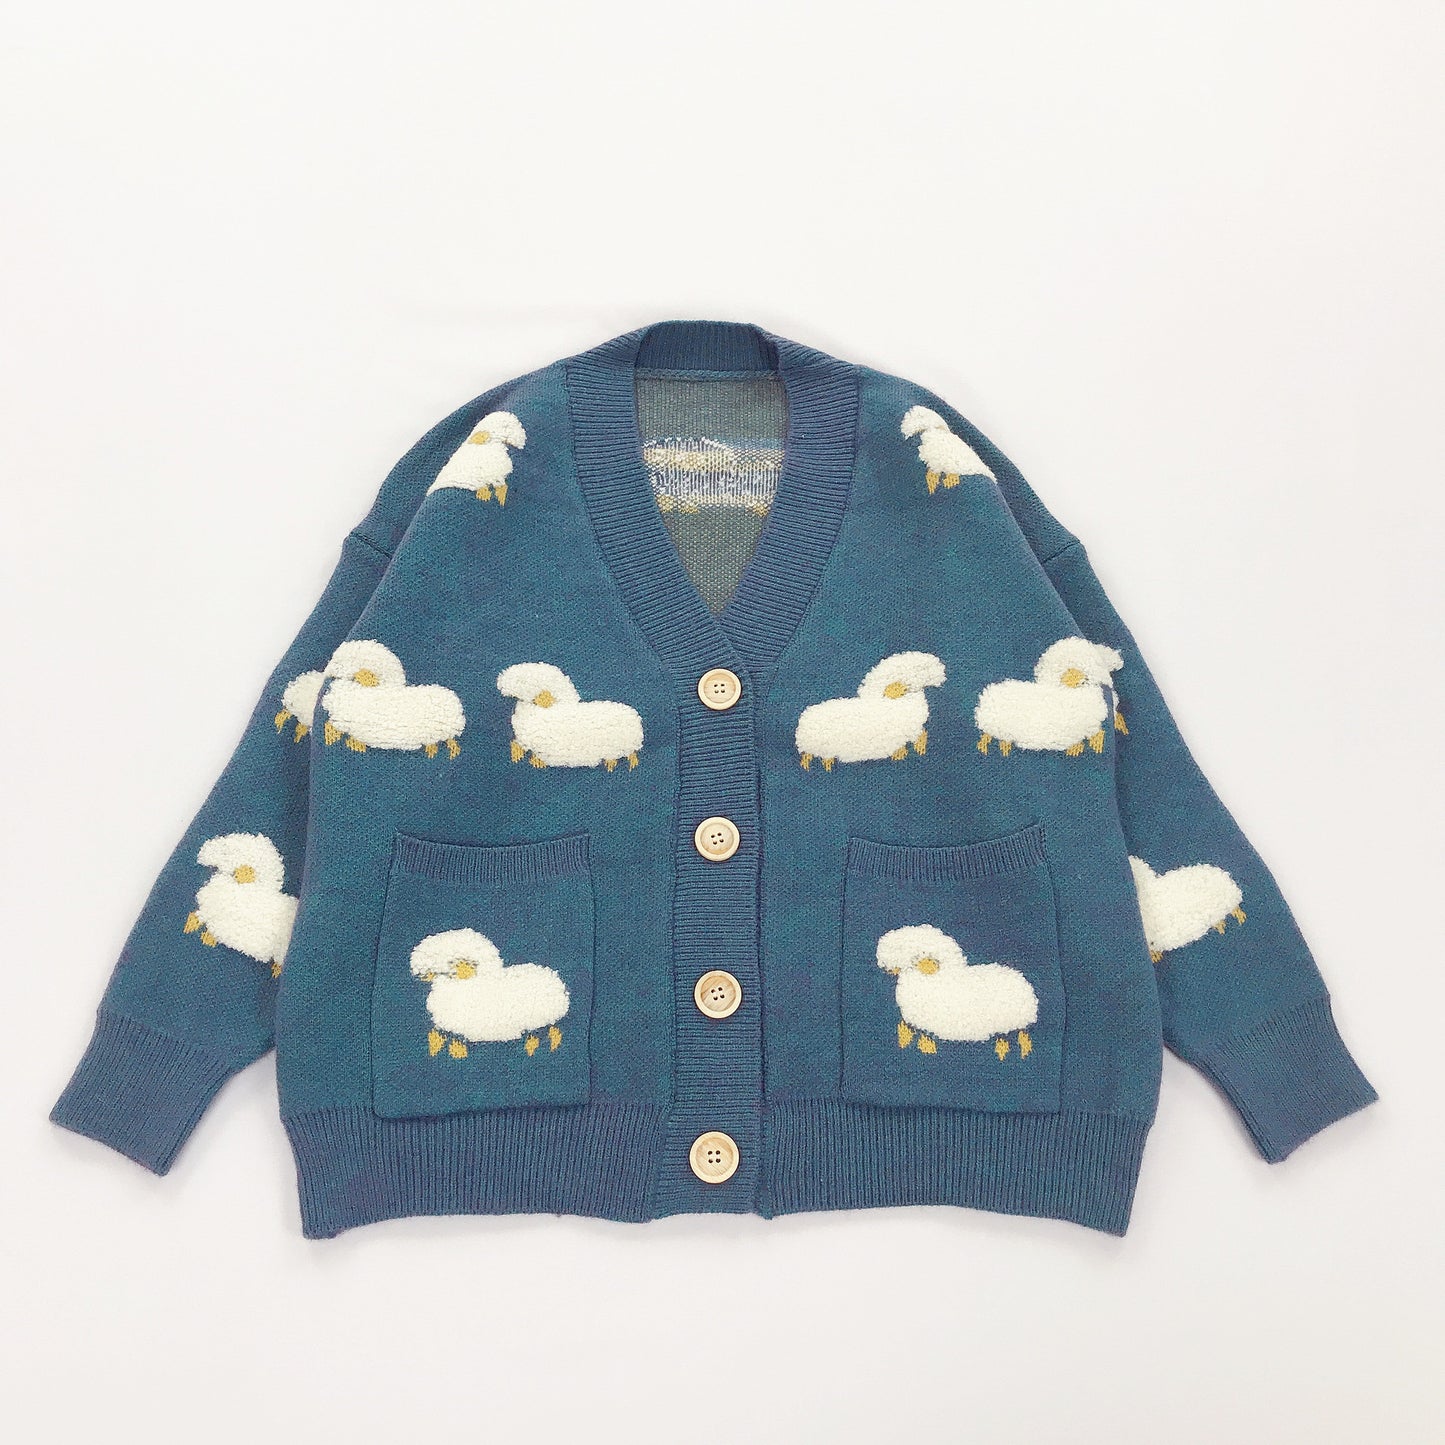 New cute little sheep cardigan sweater